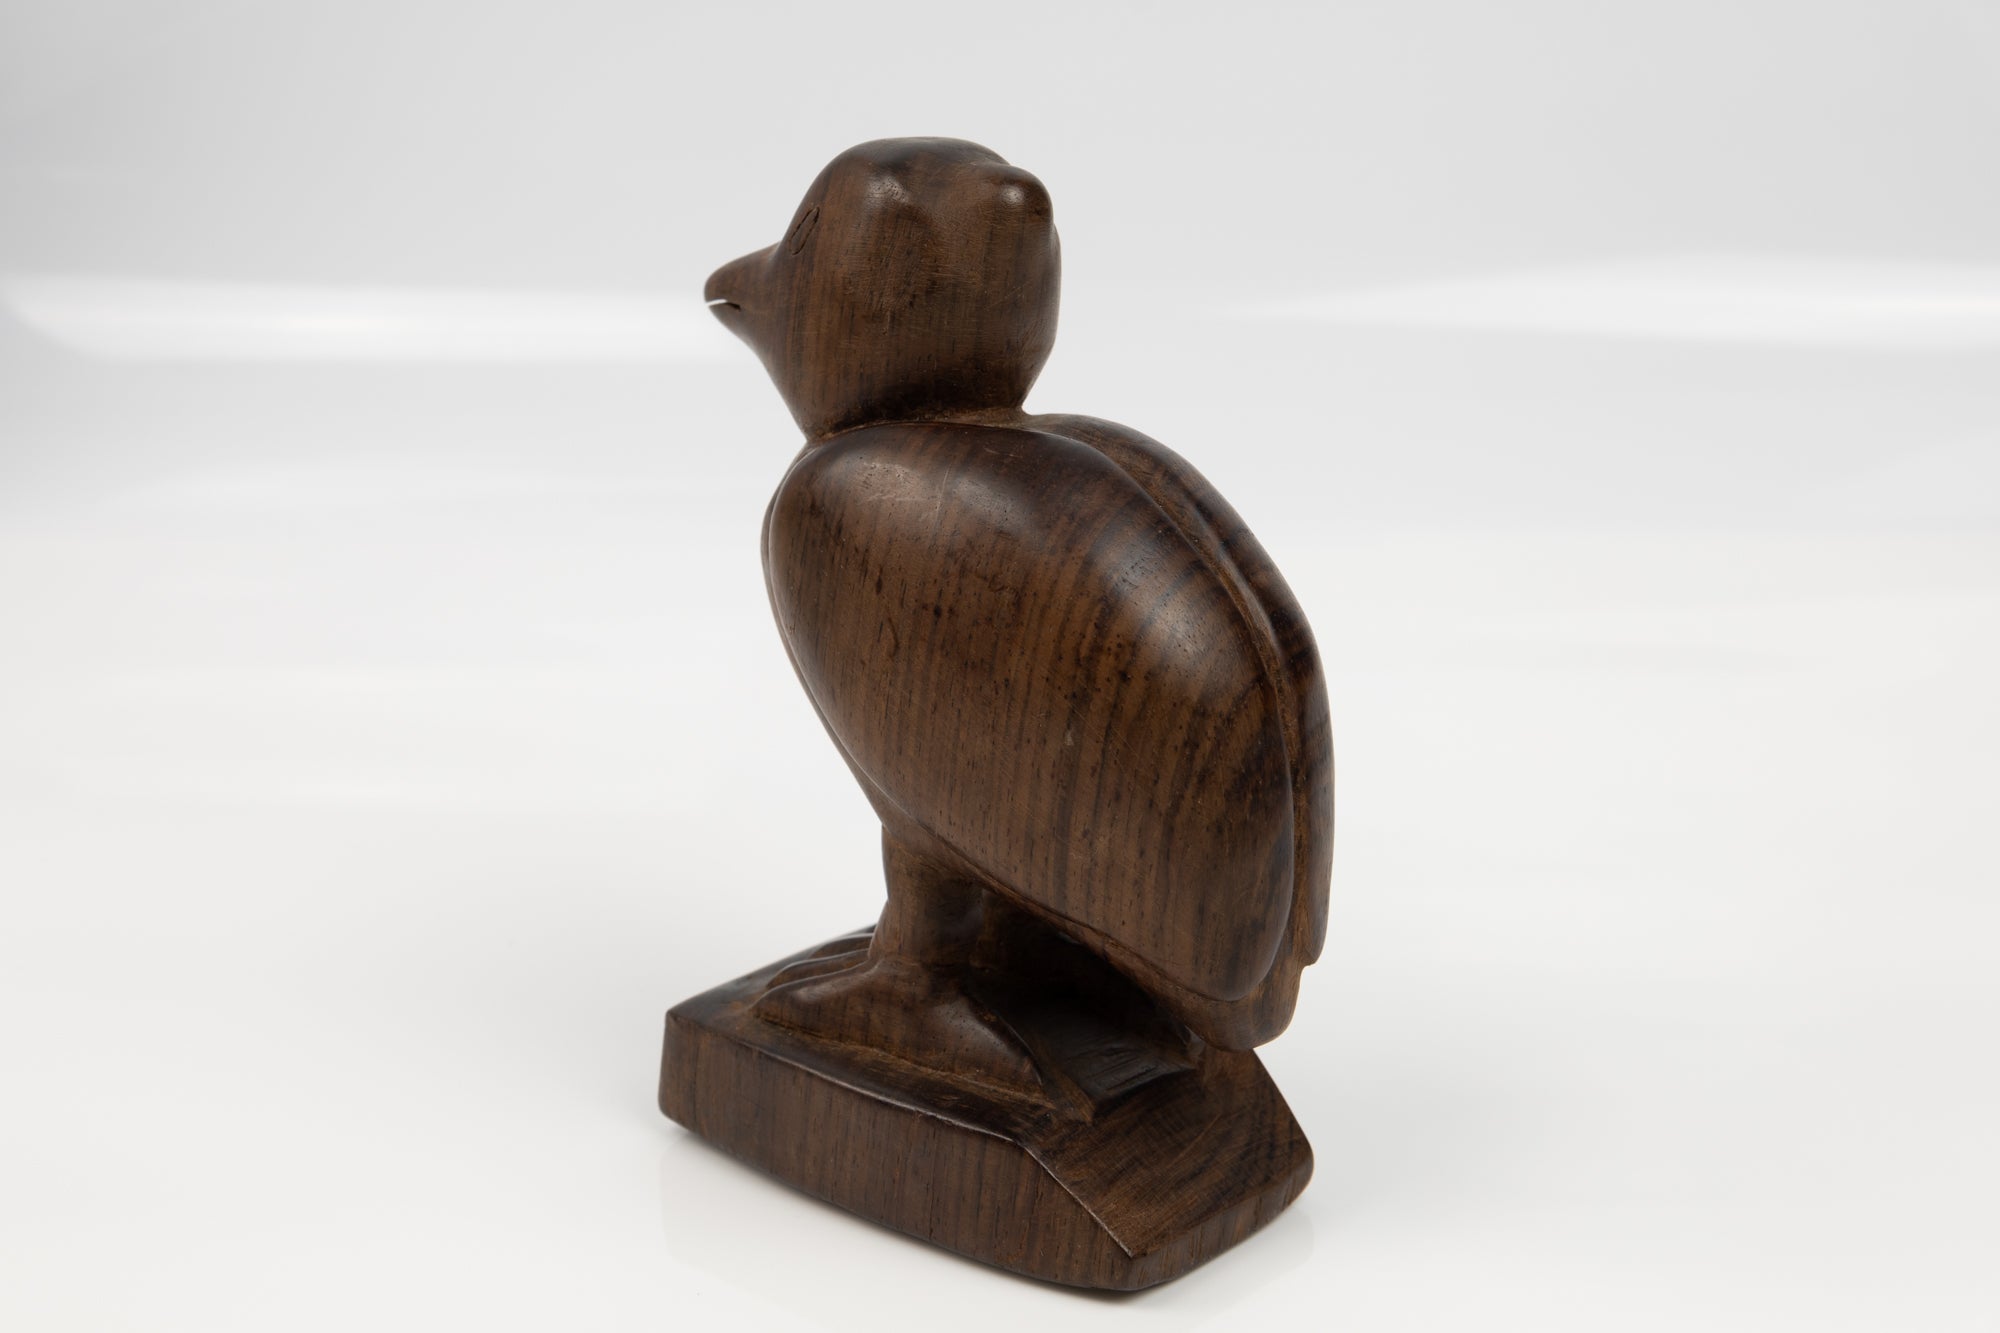 Partiridge Figurine, Wood Carving